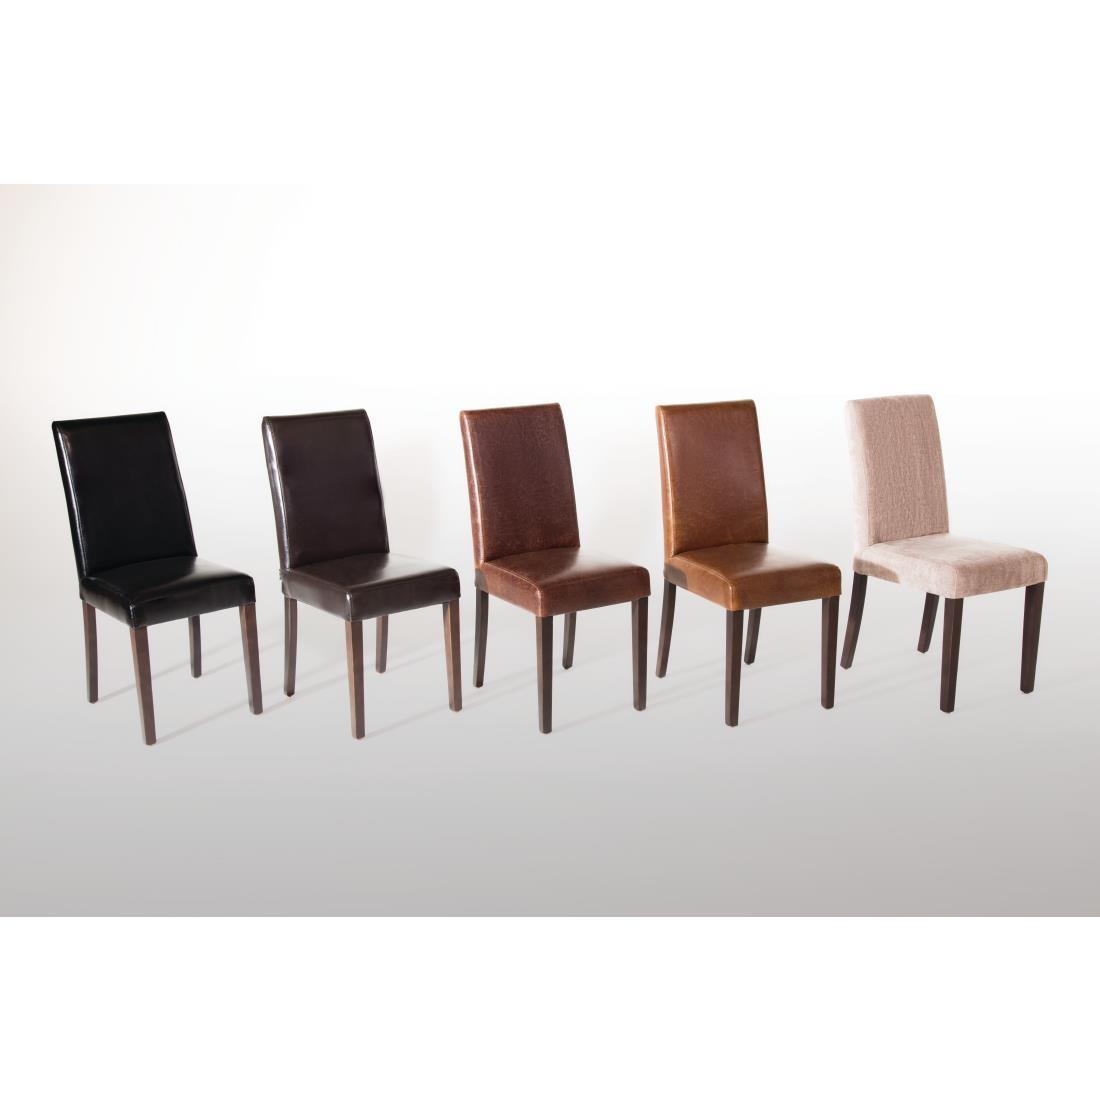 Bolero Faux Leather Dining Chair Black (Box 2) - GF954  - 7